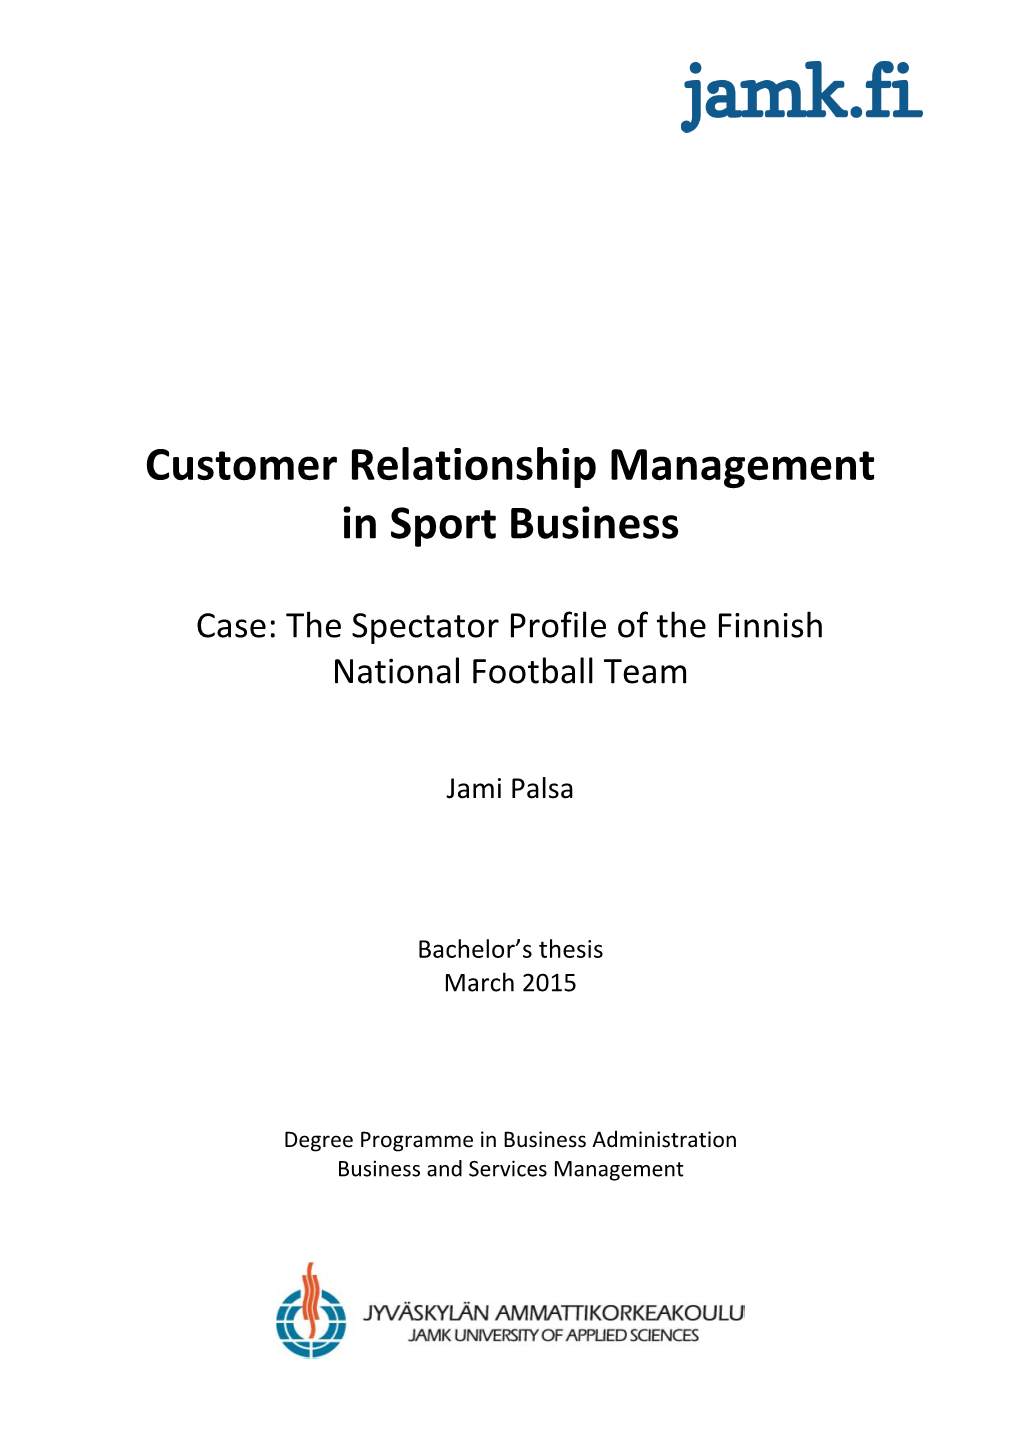 Customer Relationship Management in Sport Business